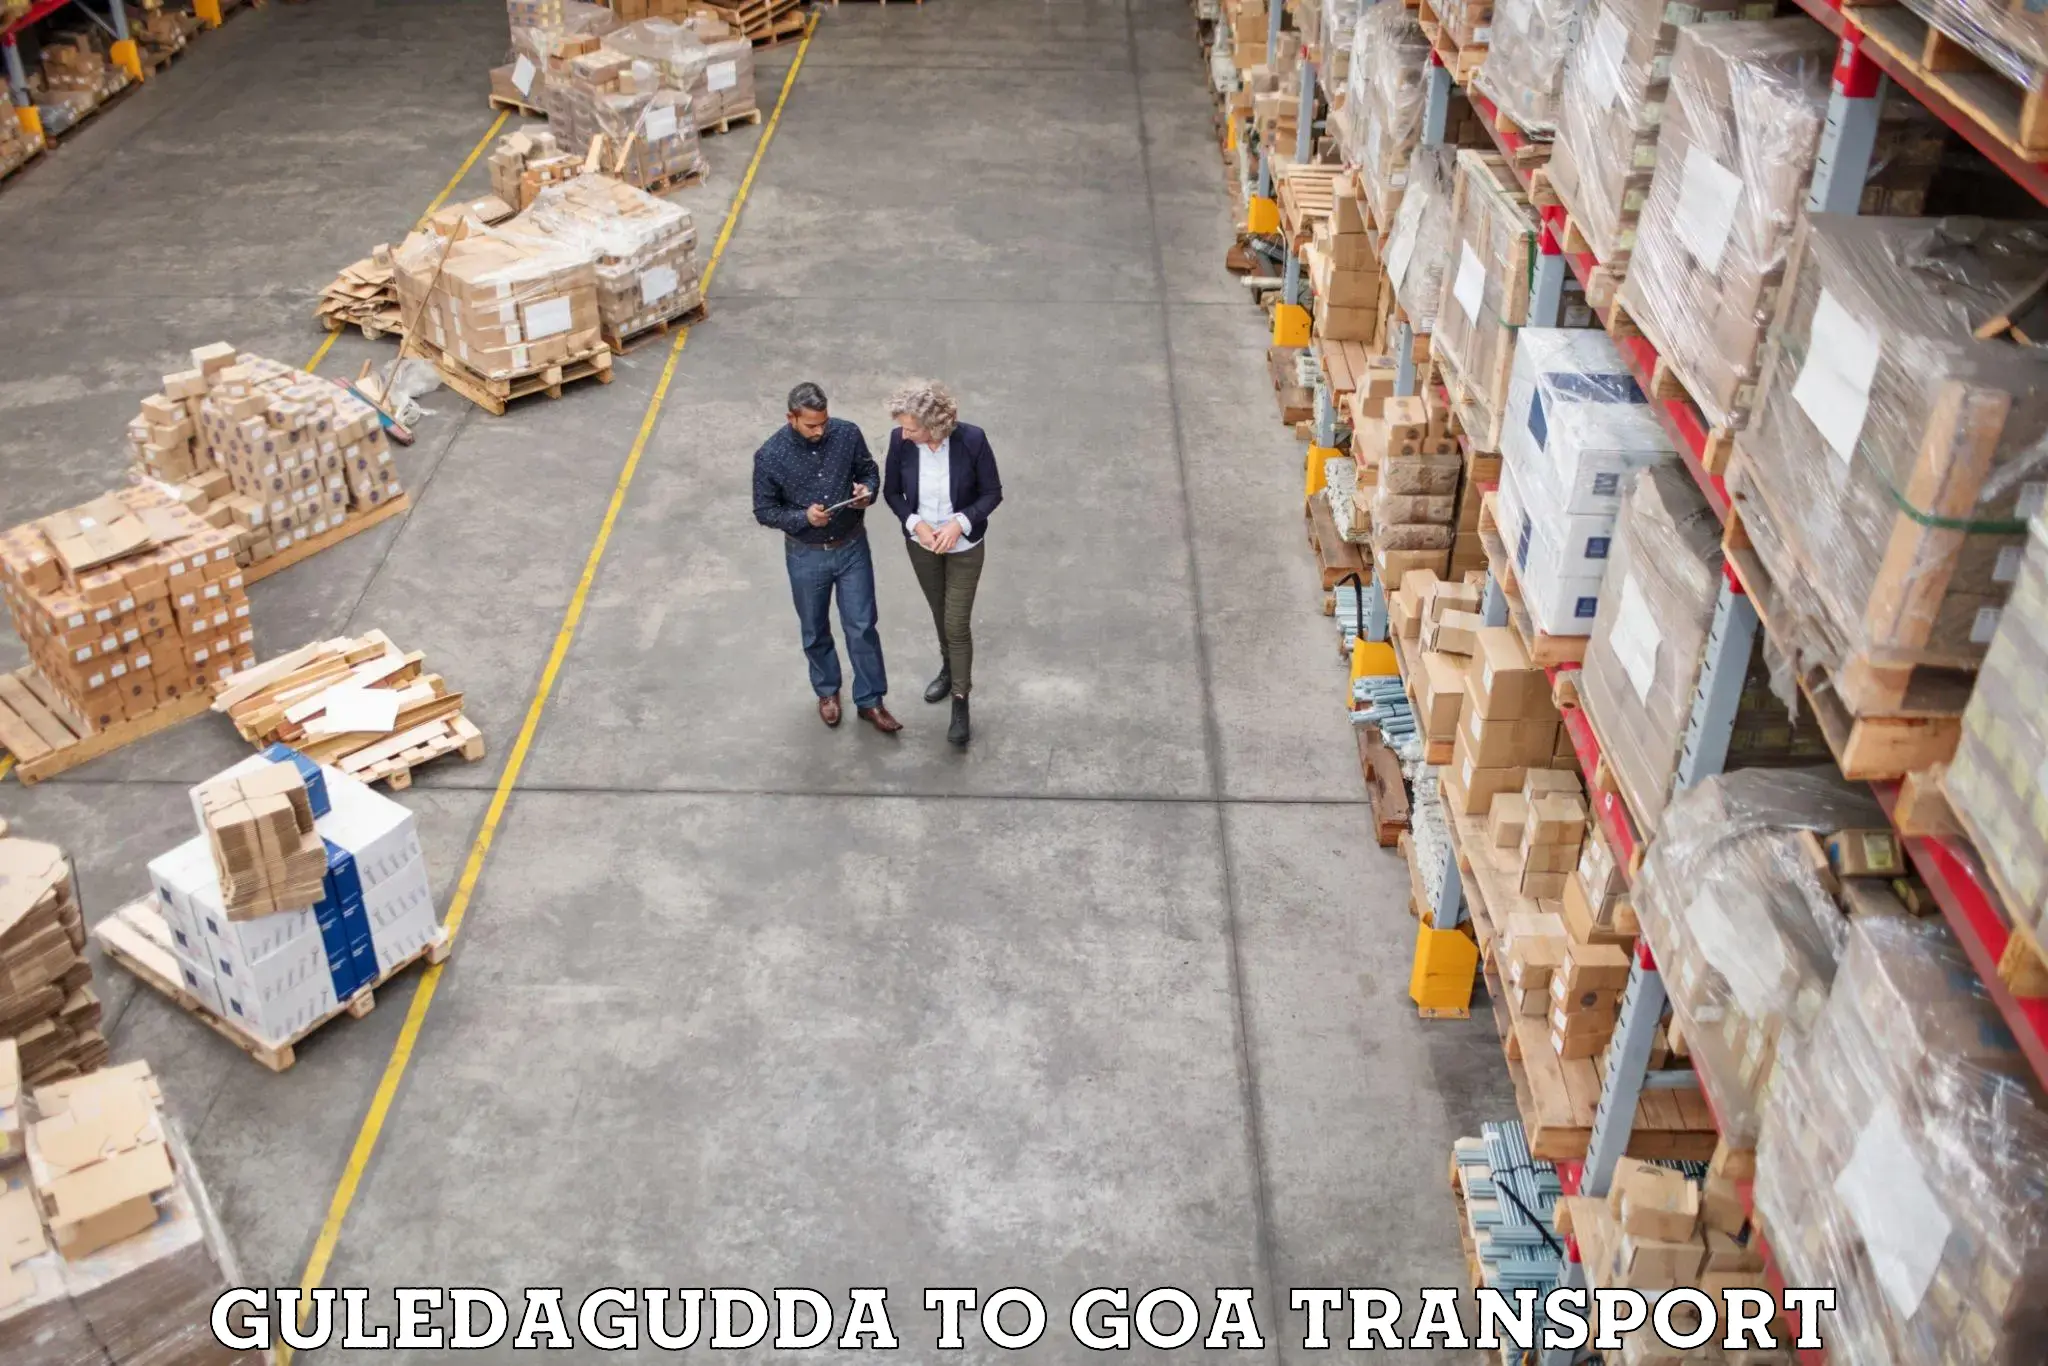 Transport shared services in Guledagudda to Goa